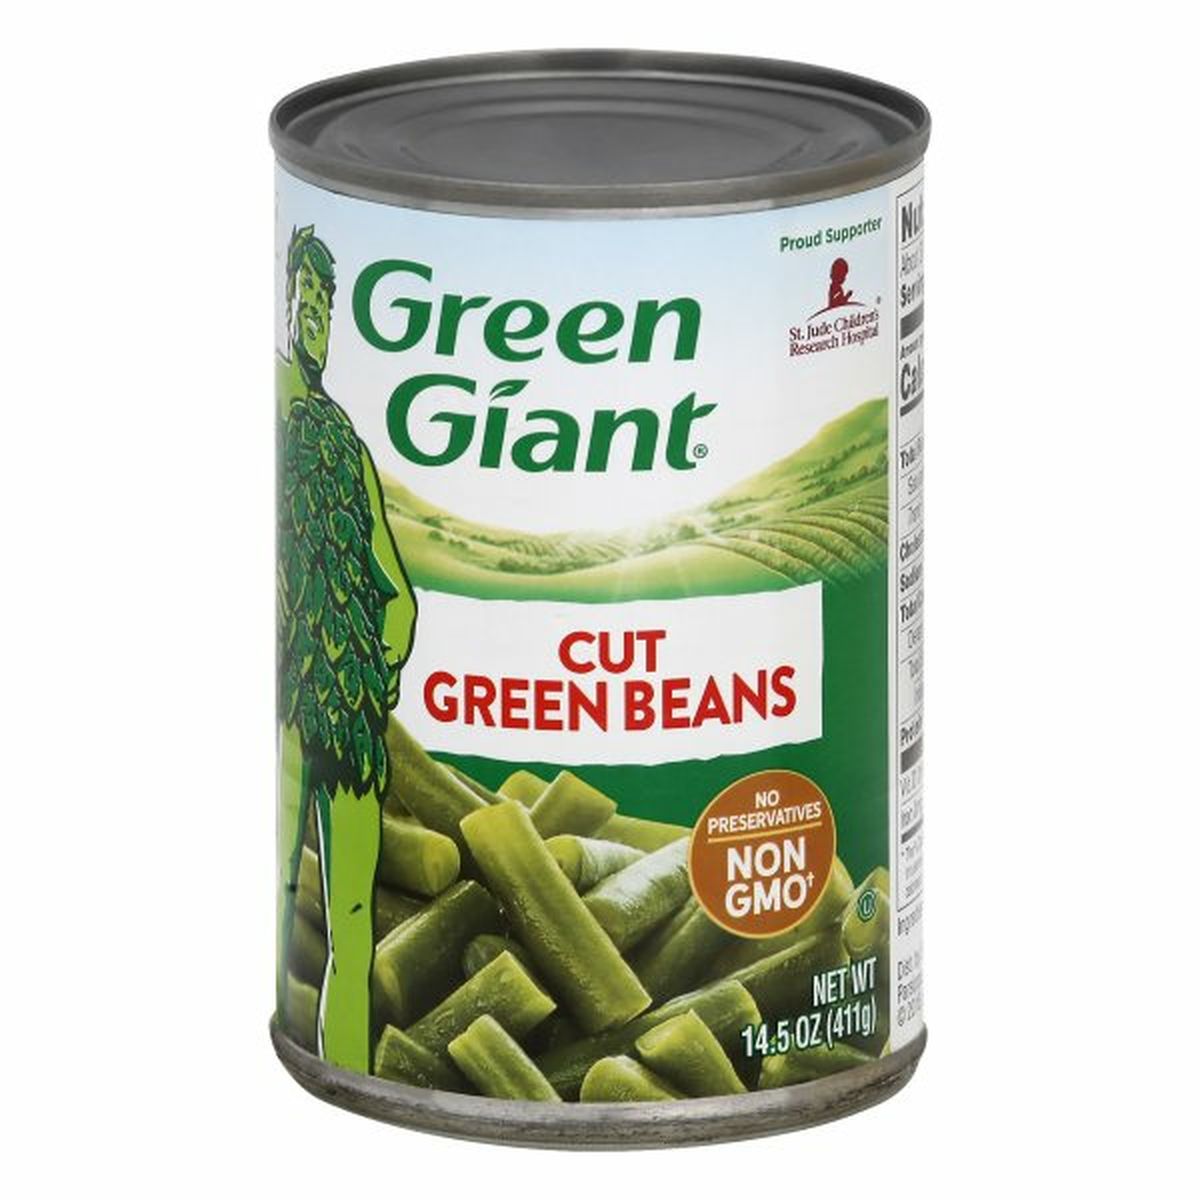 Calories in Green Giant Green Beans, Cut